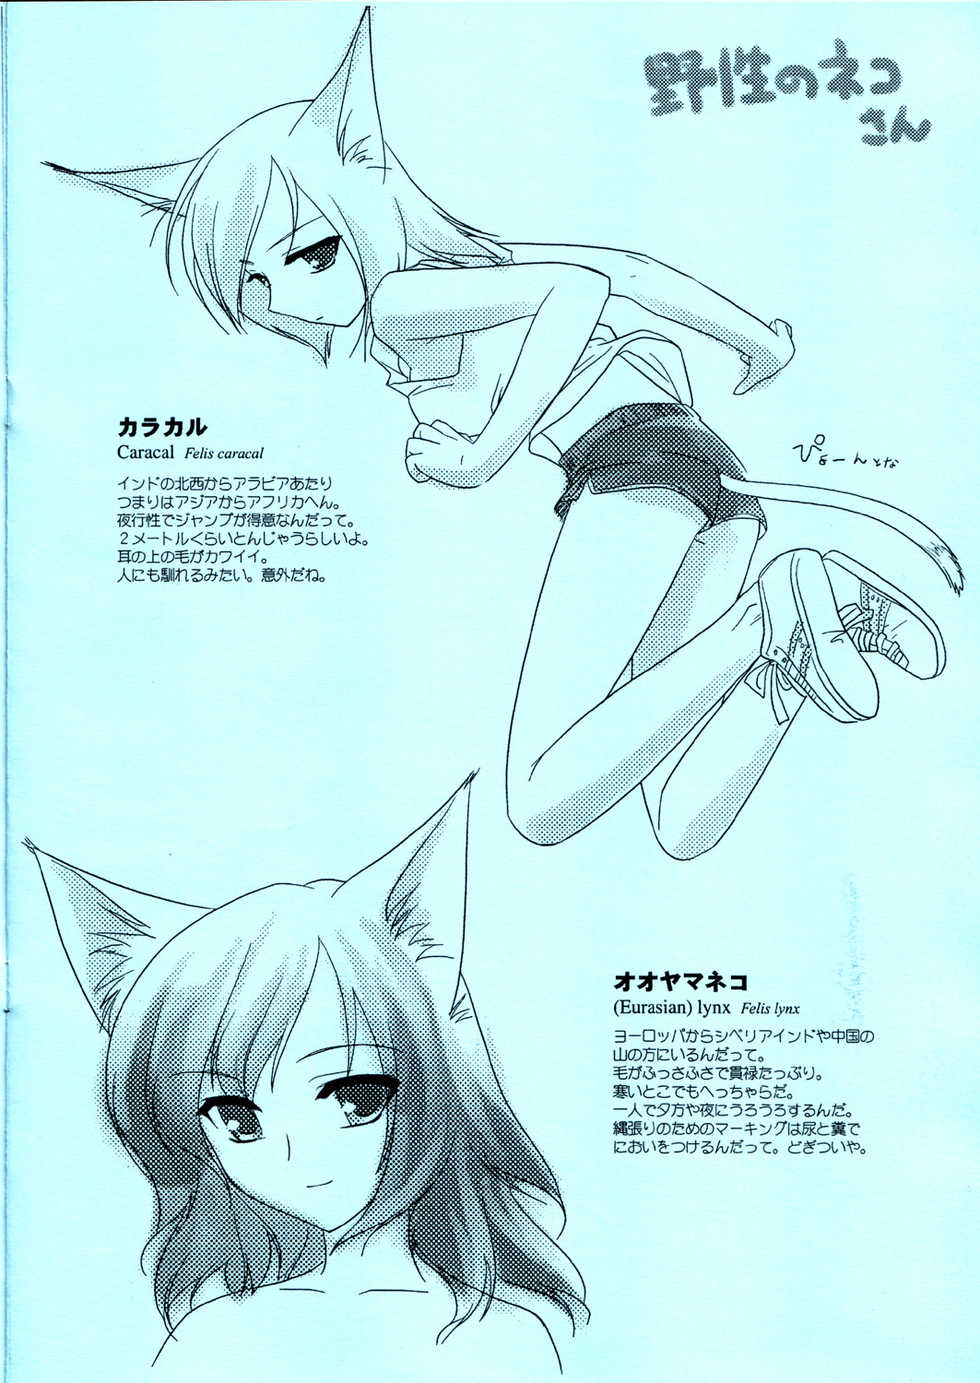 [FlavorGraphics* (Mizui Kaou)] [2003-03-16] - Feline Lovers - Page 7